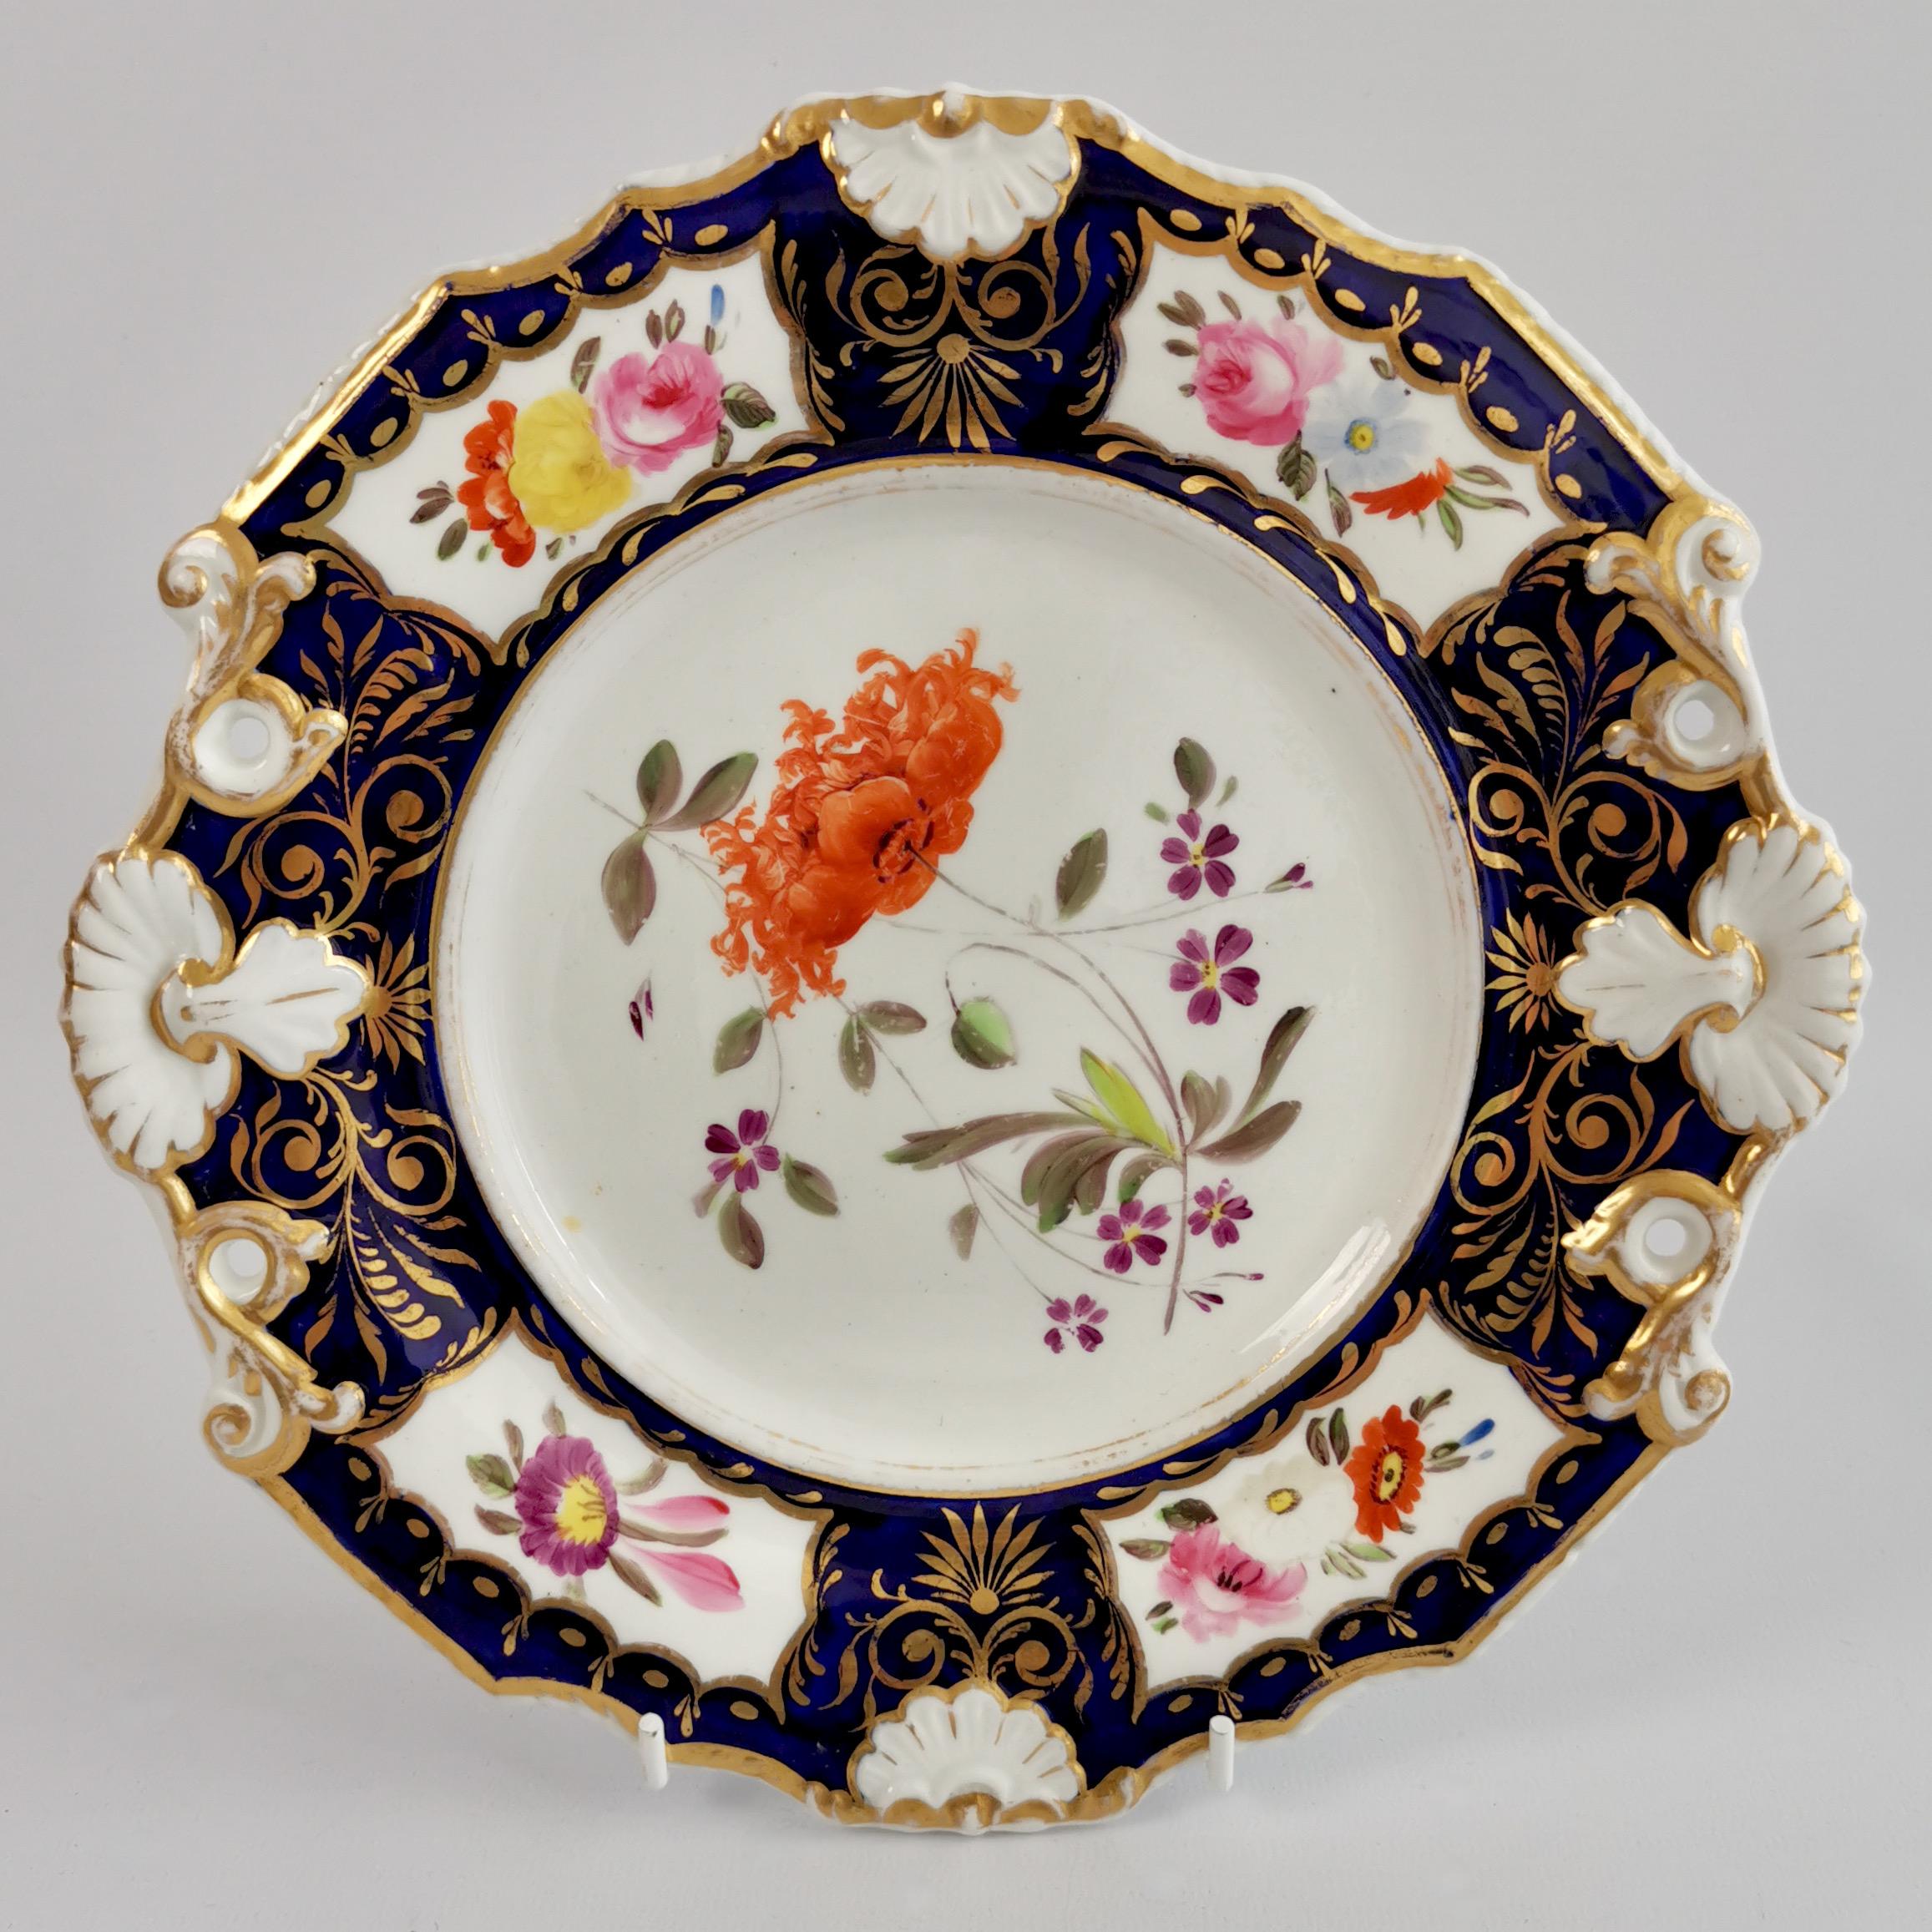 New Hall Porcelain Part Dessert Service, Cobalt Blue, Flowers, Regency 1824-1830 2